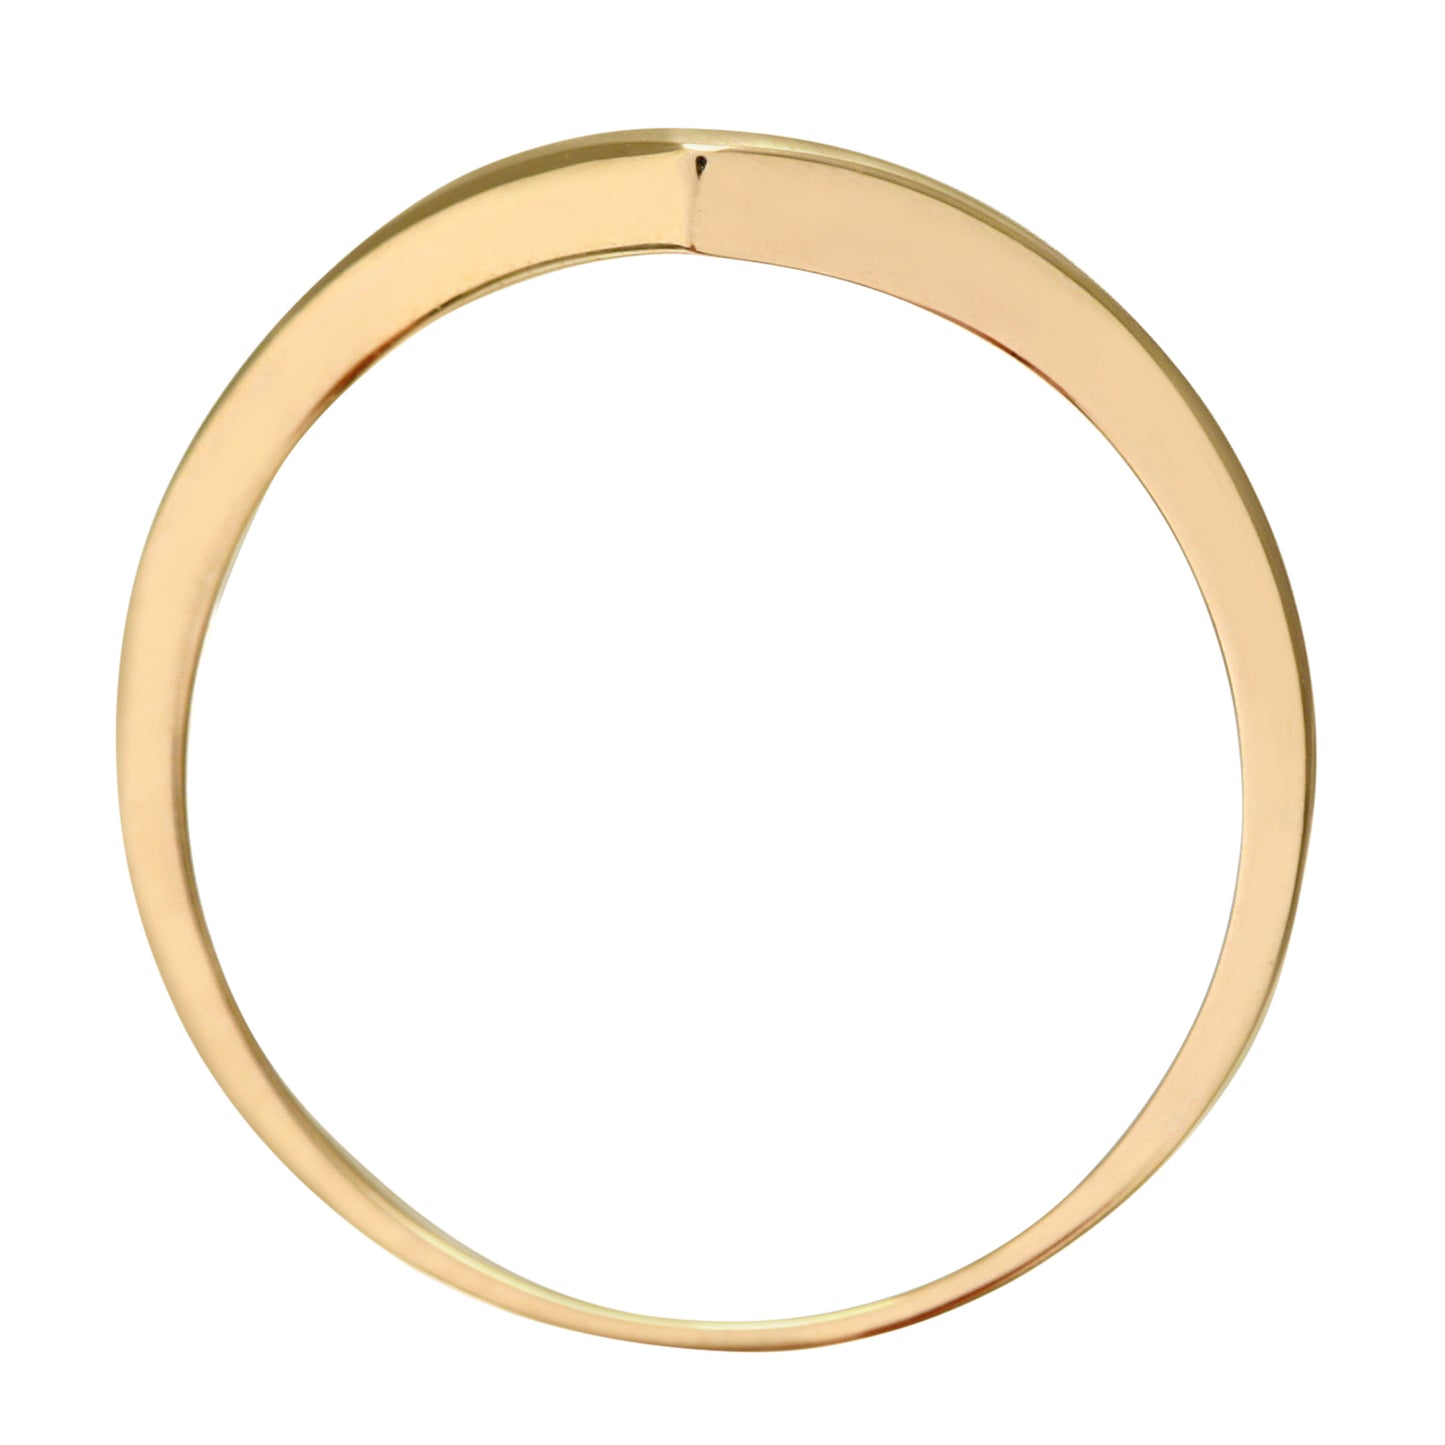 9ct Gold  2pts Diamond 0.46ct Sapphire Channel Wishbone Ring 2mm - PR0AXL3026YSA